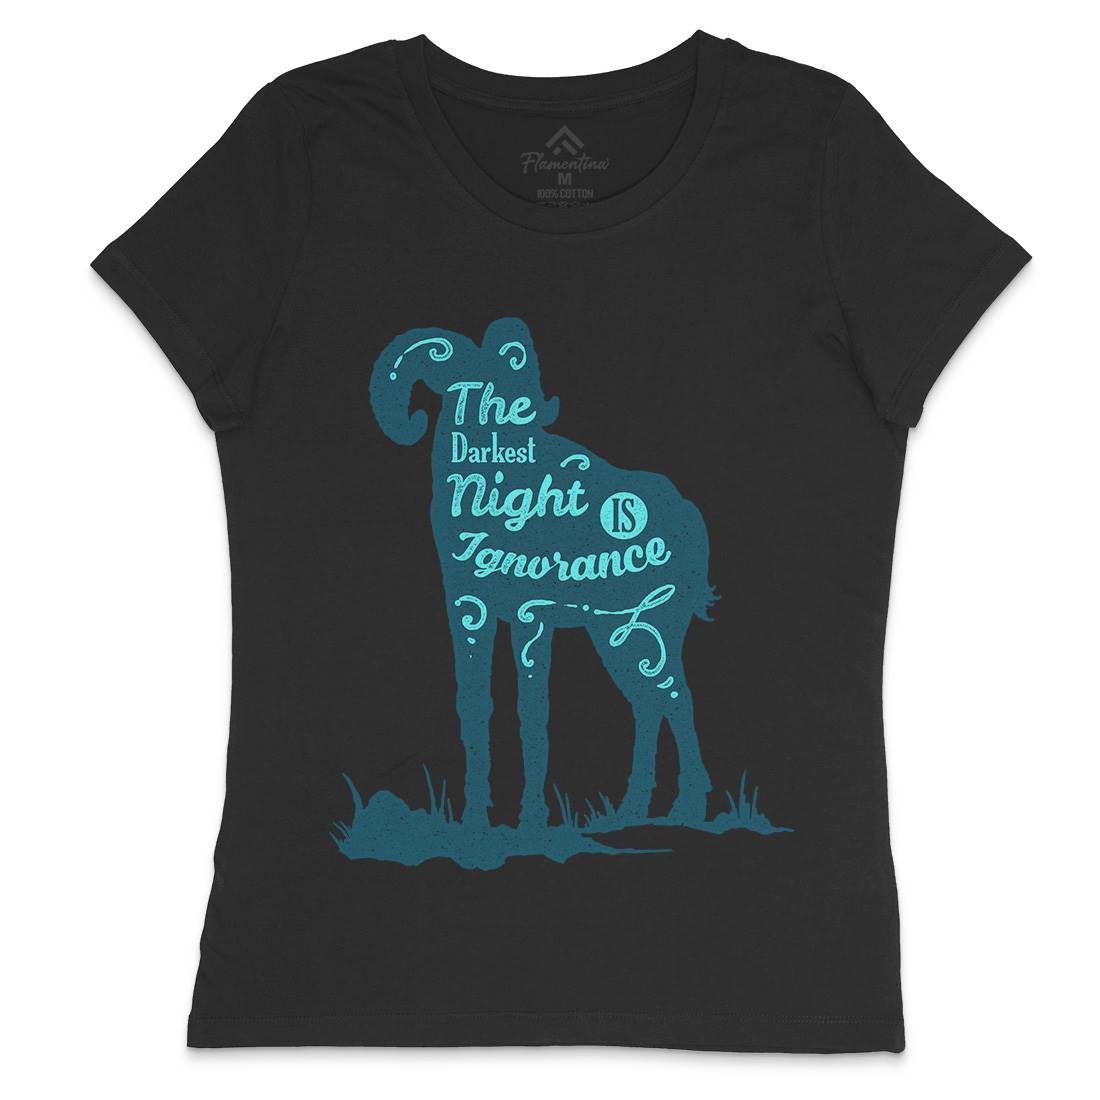 Darkest Night Womens Crew Neck T-Shirt Quotes A377